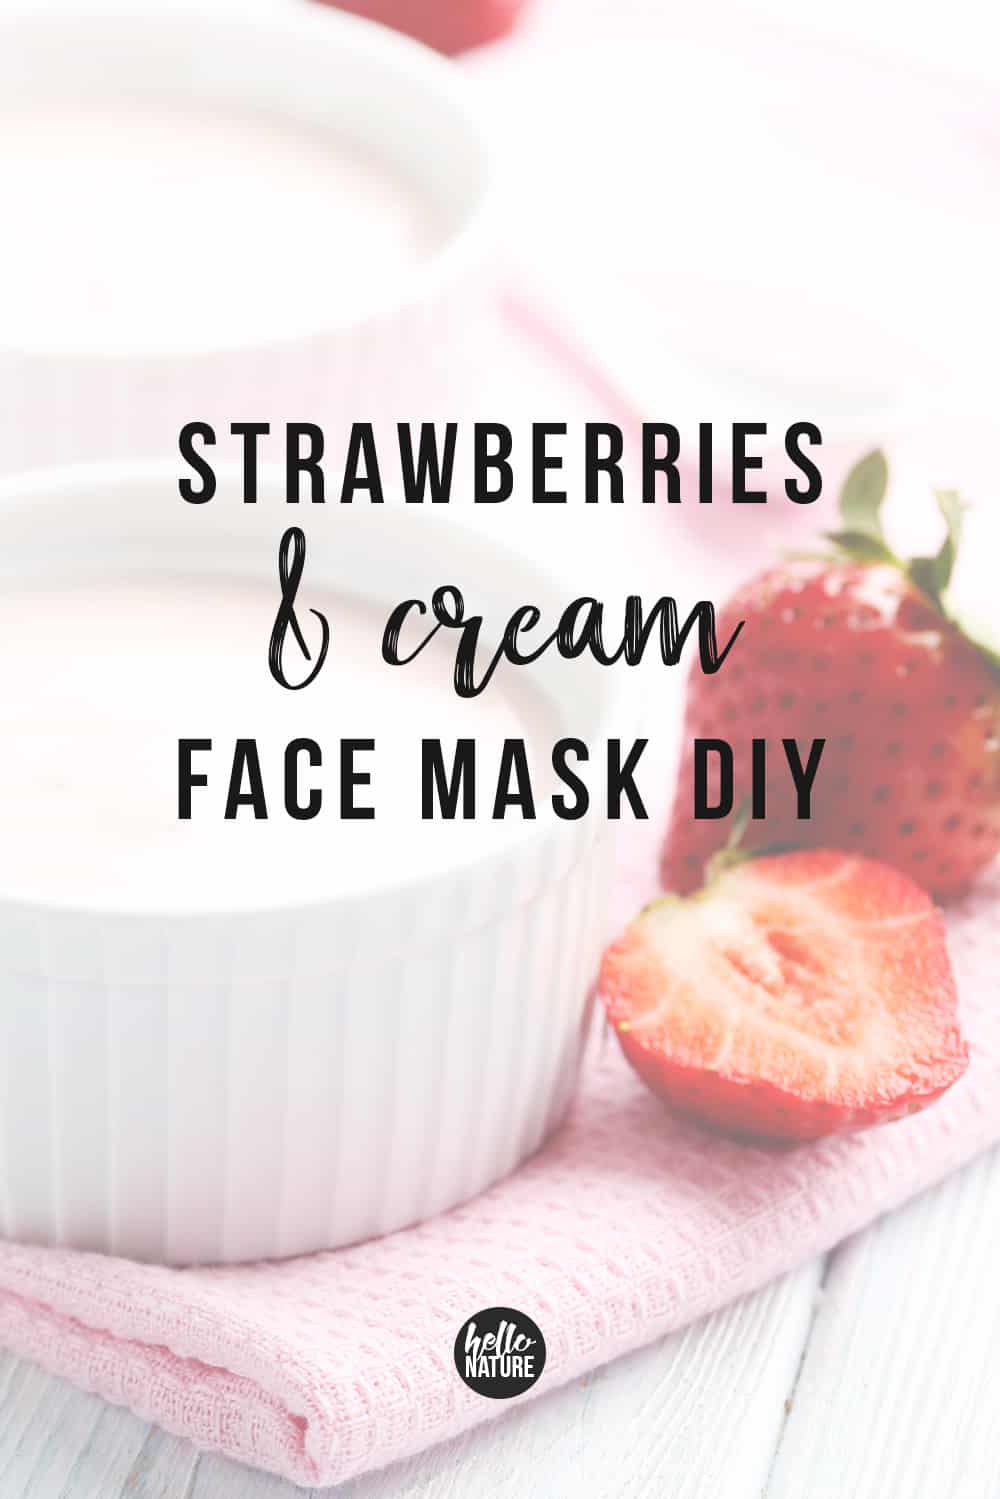 Oatmeal Face Mask DIY